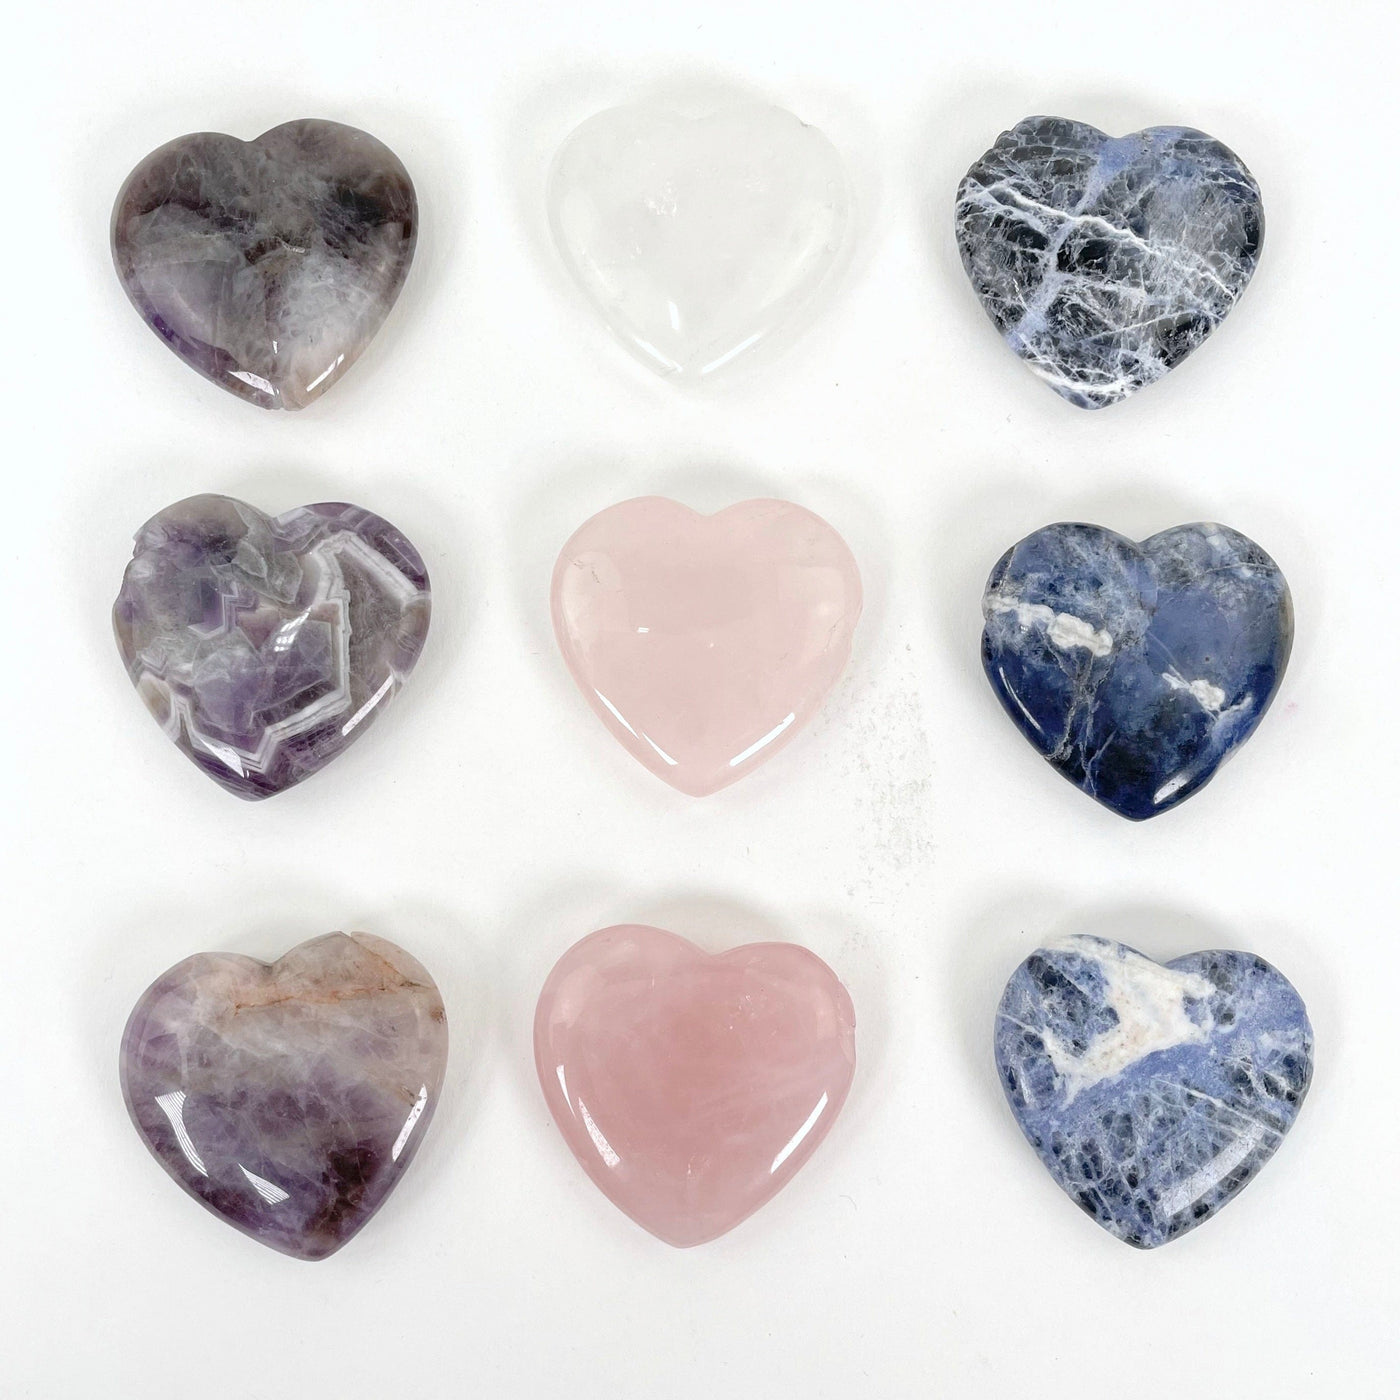 all polished heart stone options laying flat